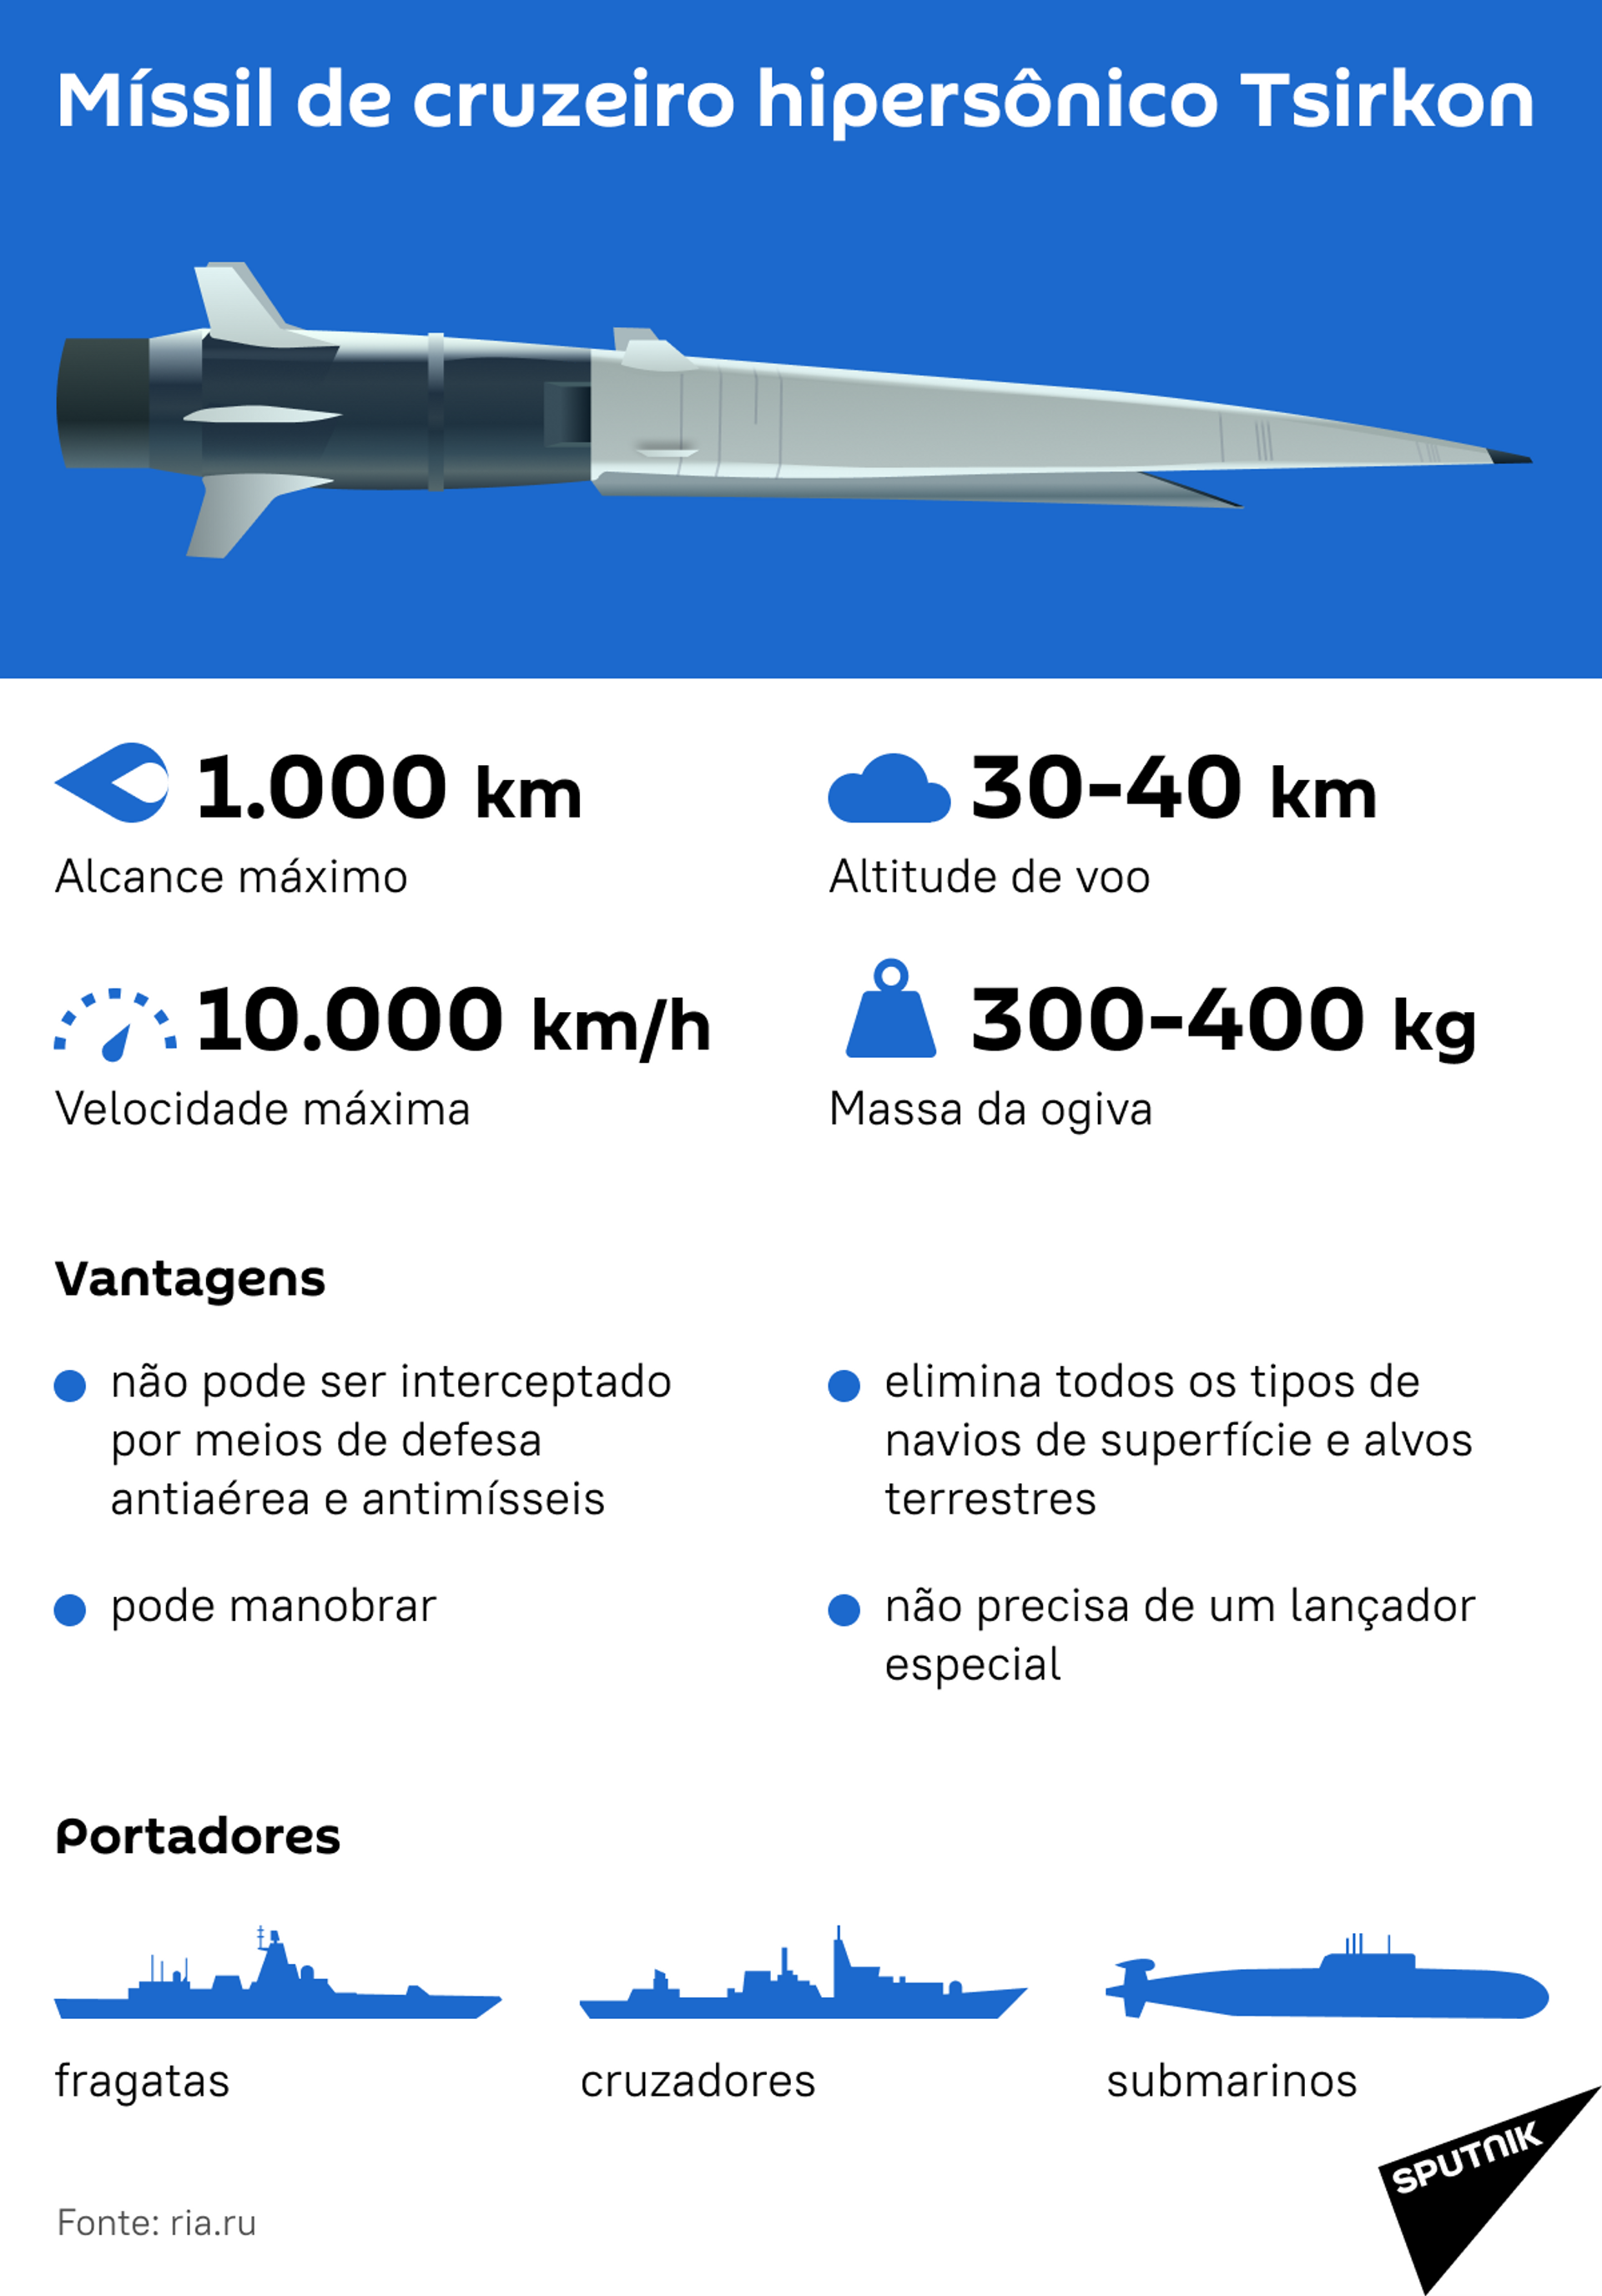 Tsirkon: 1º míssil de cruzeiro hipersônico no mundo - Sputnik Brasil, 1920, 20.07.2021